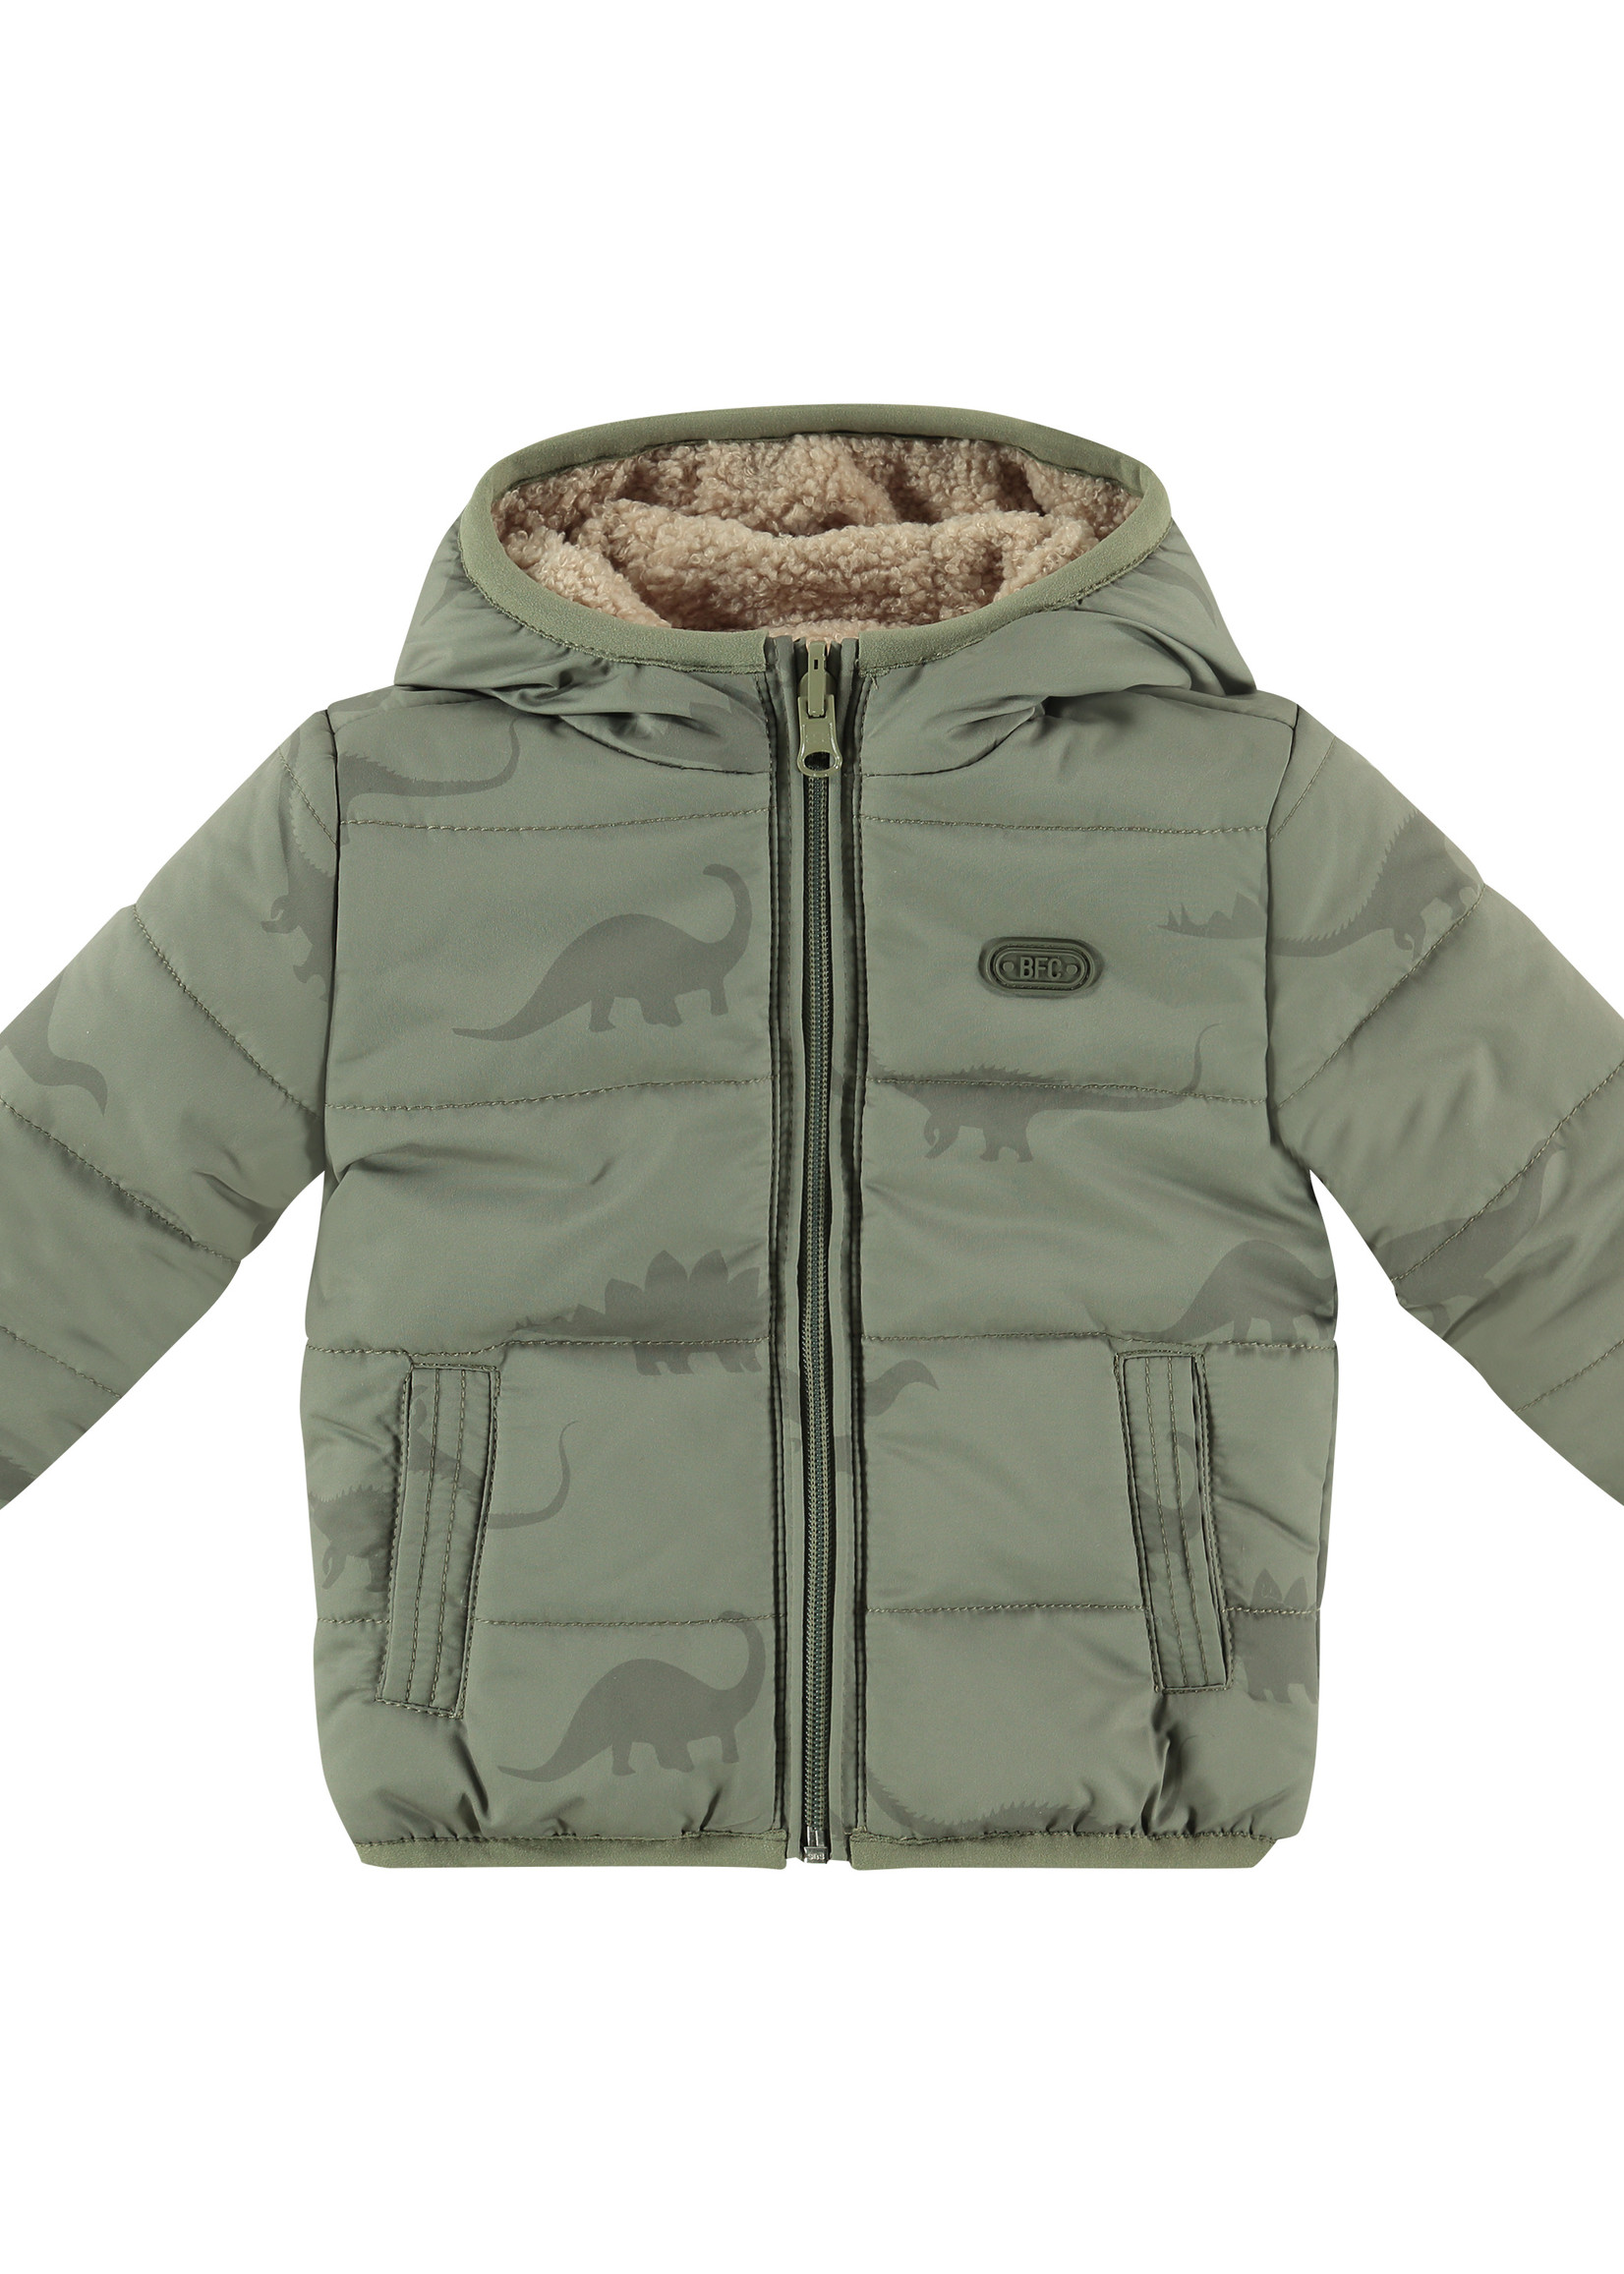 Babyface boys winterjacket reversible, olive green, BBE22507177